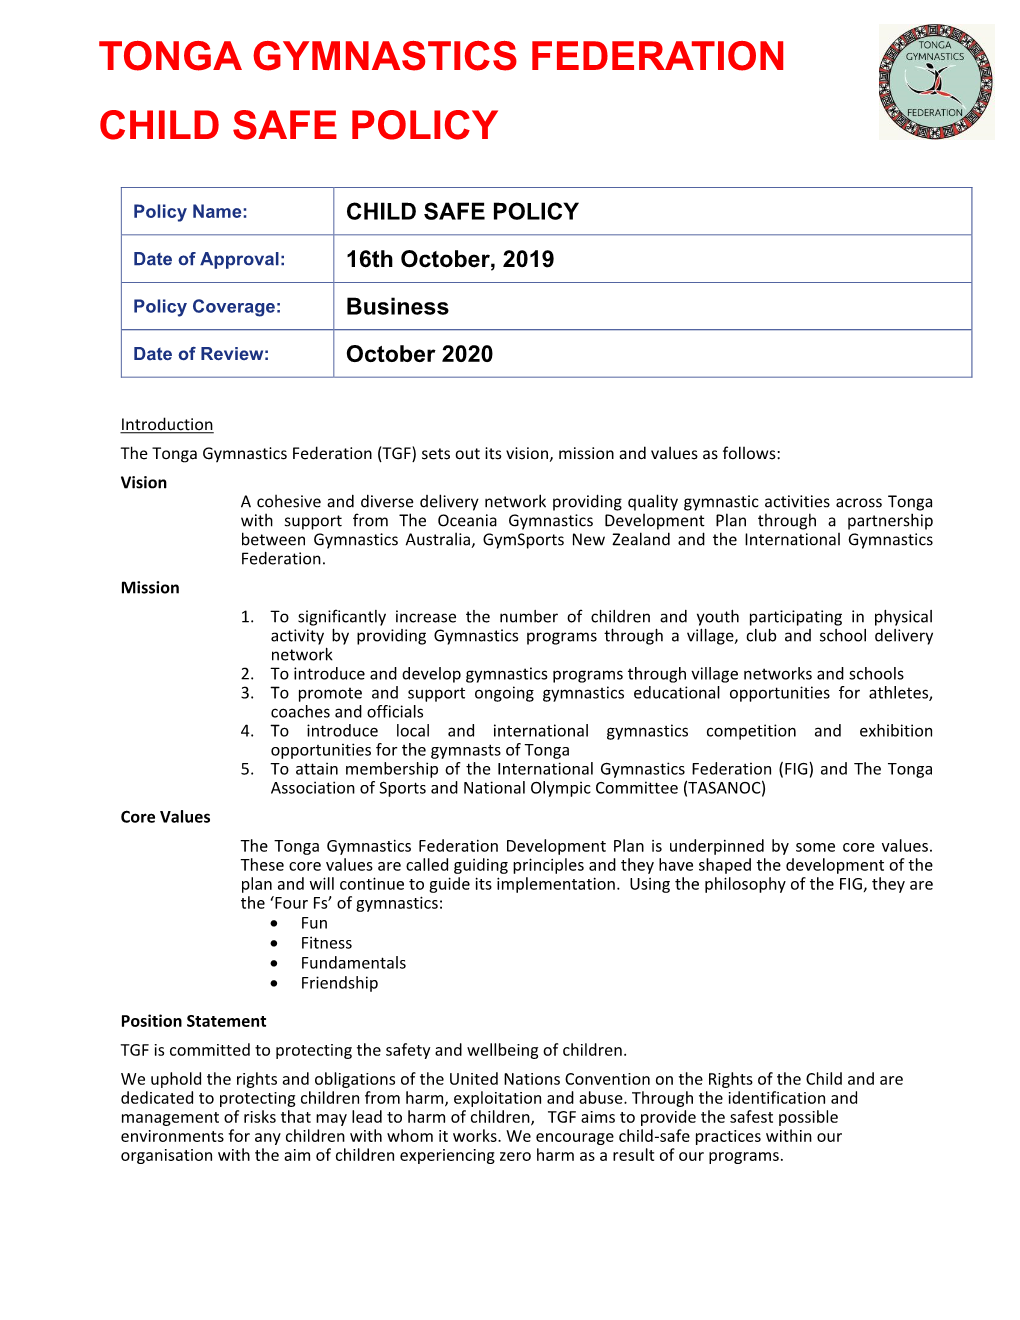 Tonga Gymnastics Federation Child Safe Policy